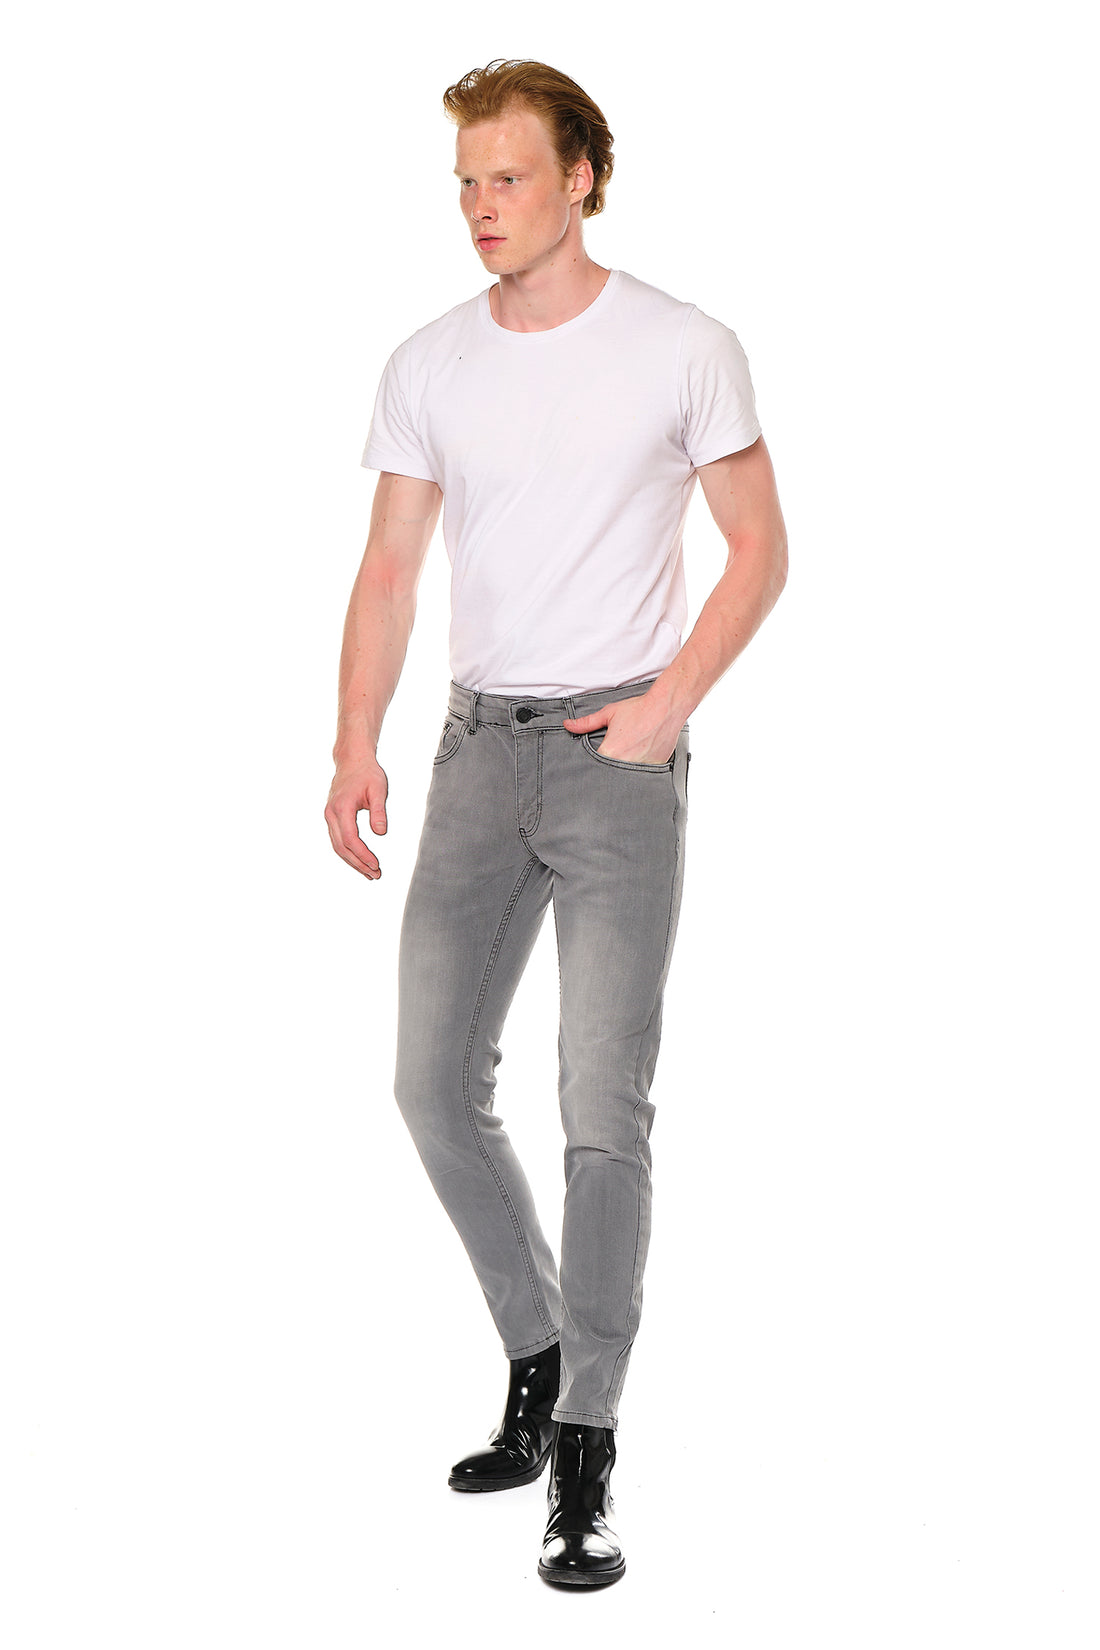 1643 grey Jeans - Ron Tomson